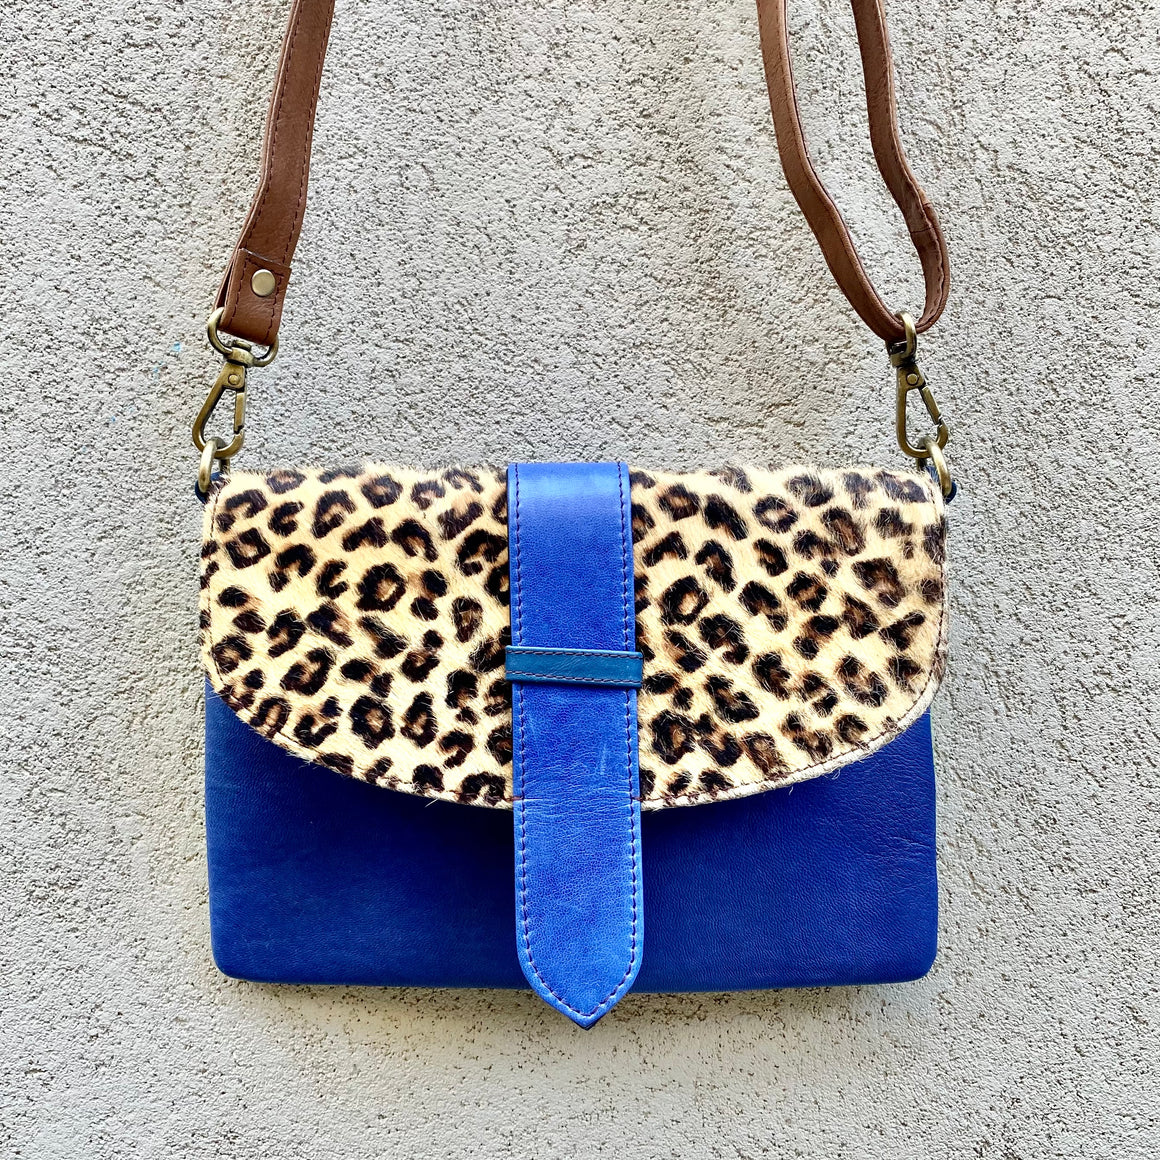 Dakota Cowhide and Leather Crossbody Clutch Bag - Leopard, Blue, Green - KITTY KAT